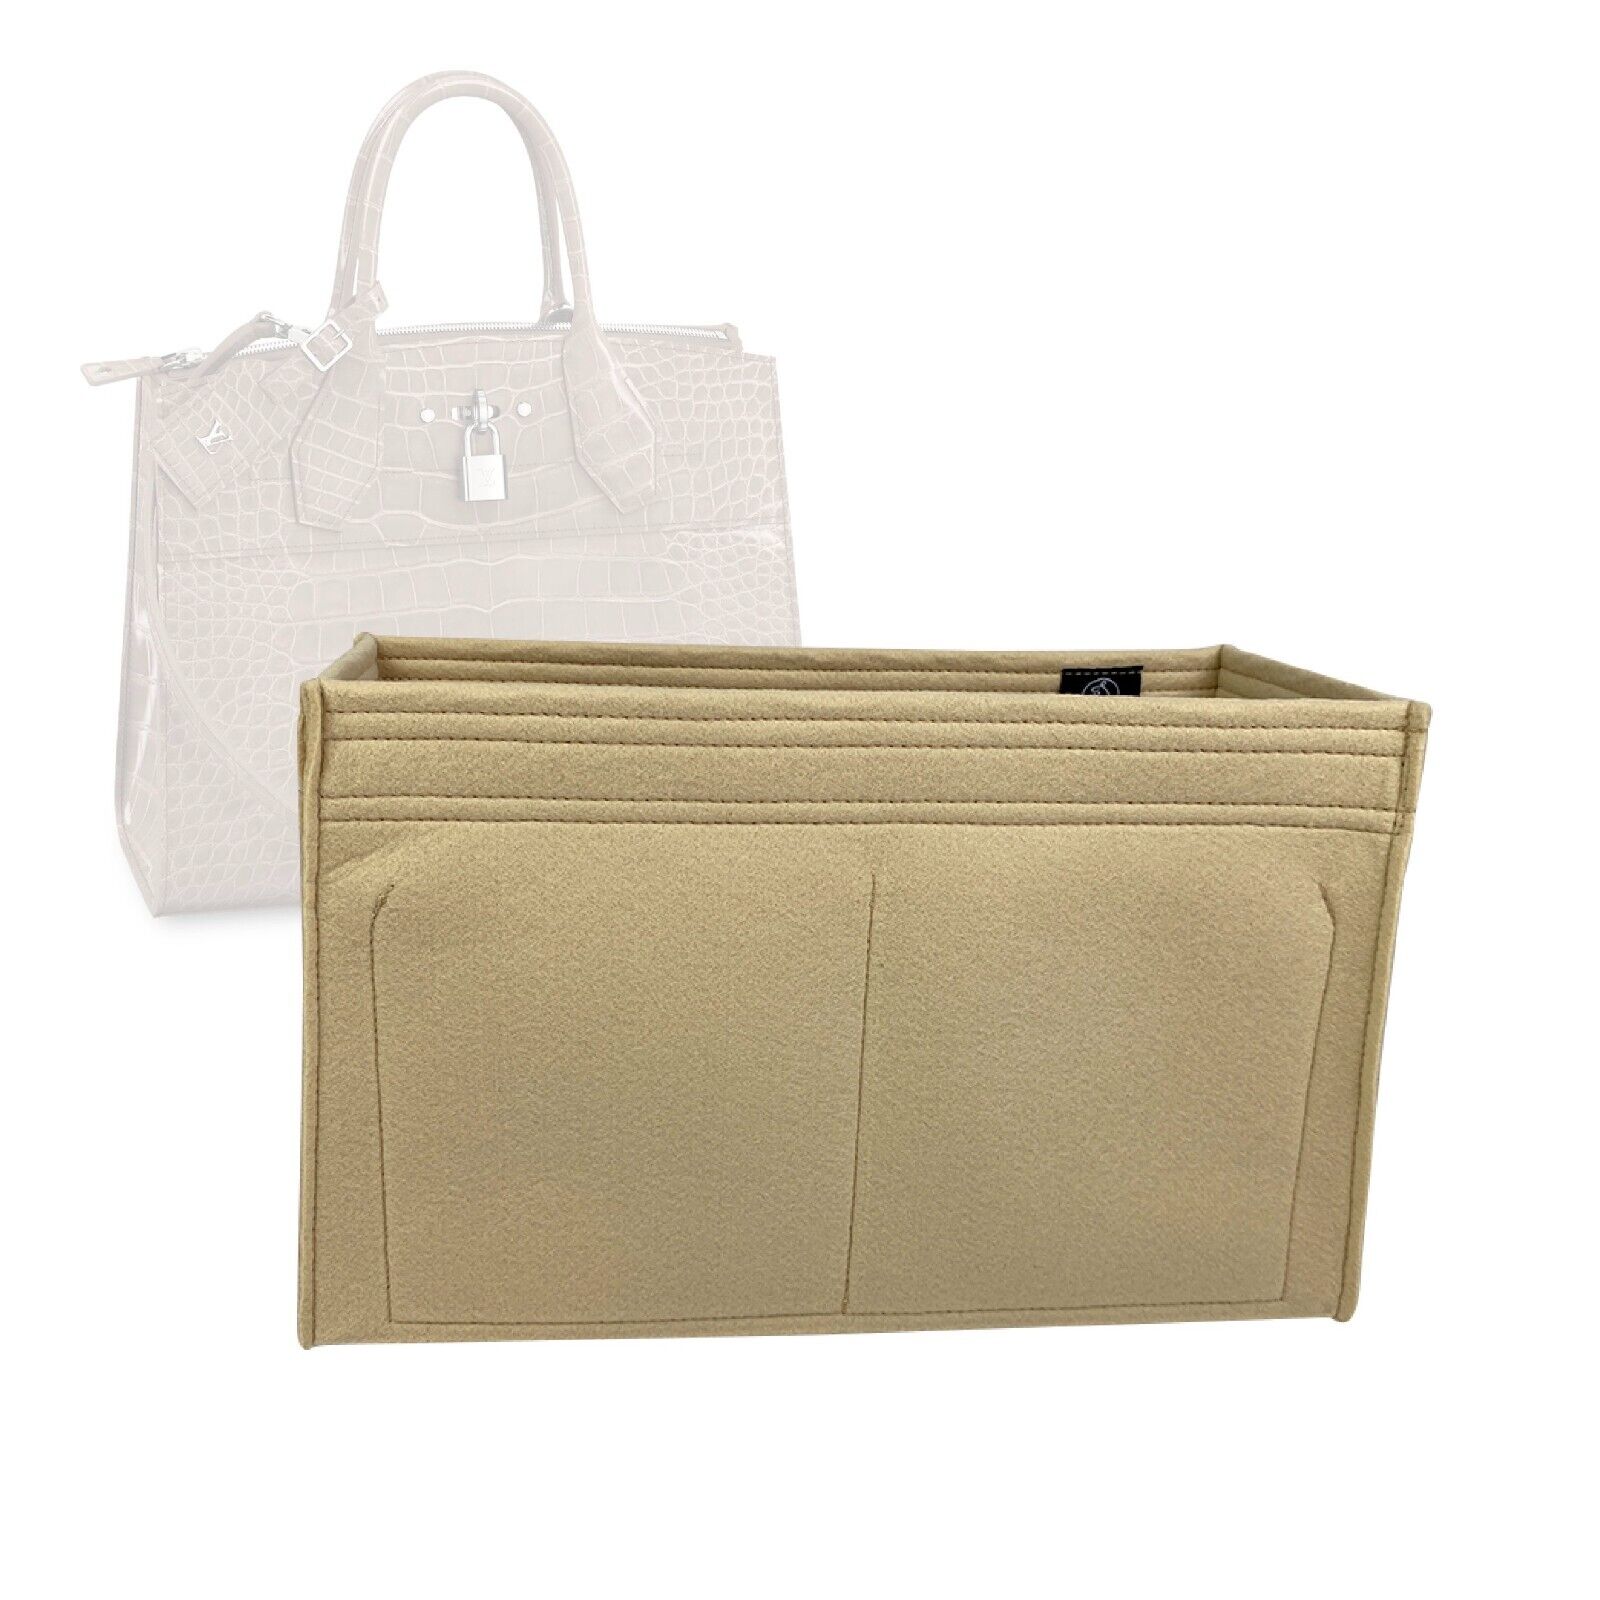 Handbag Purse Organizer for Louis Vuitton LV. We make luxury echo